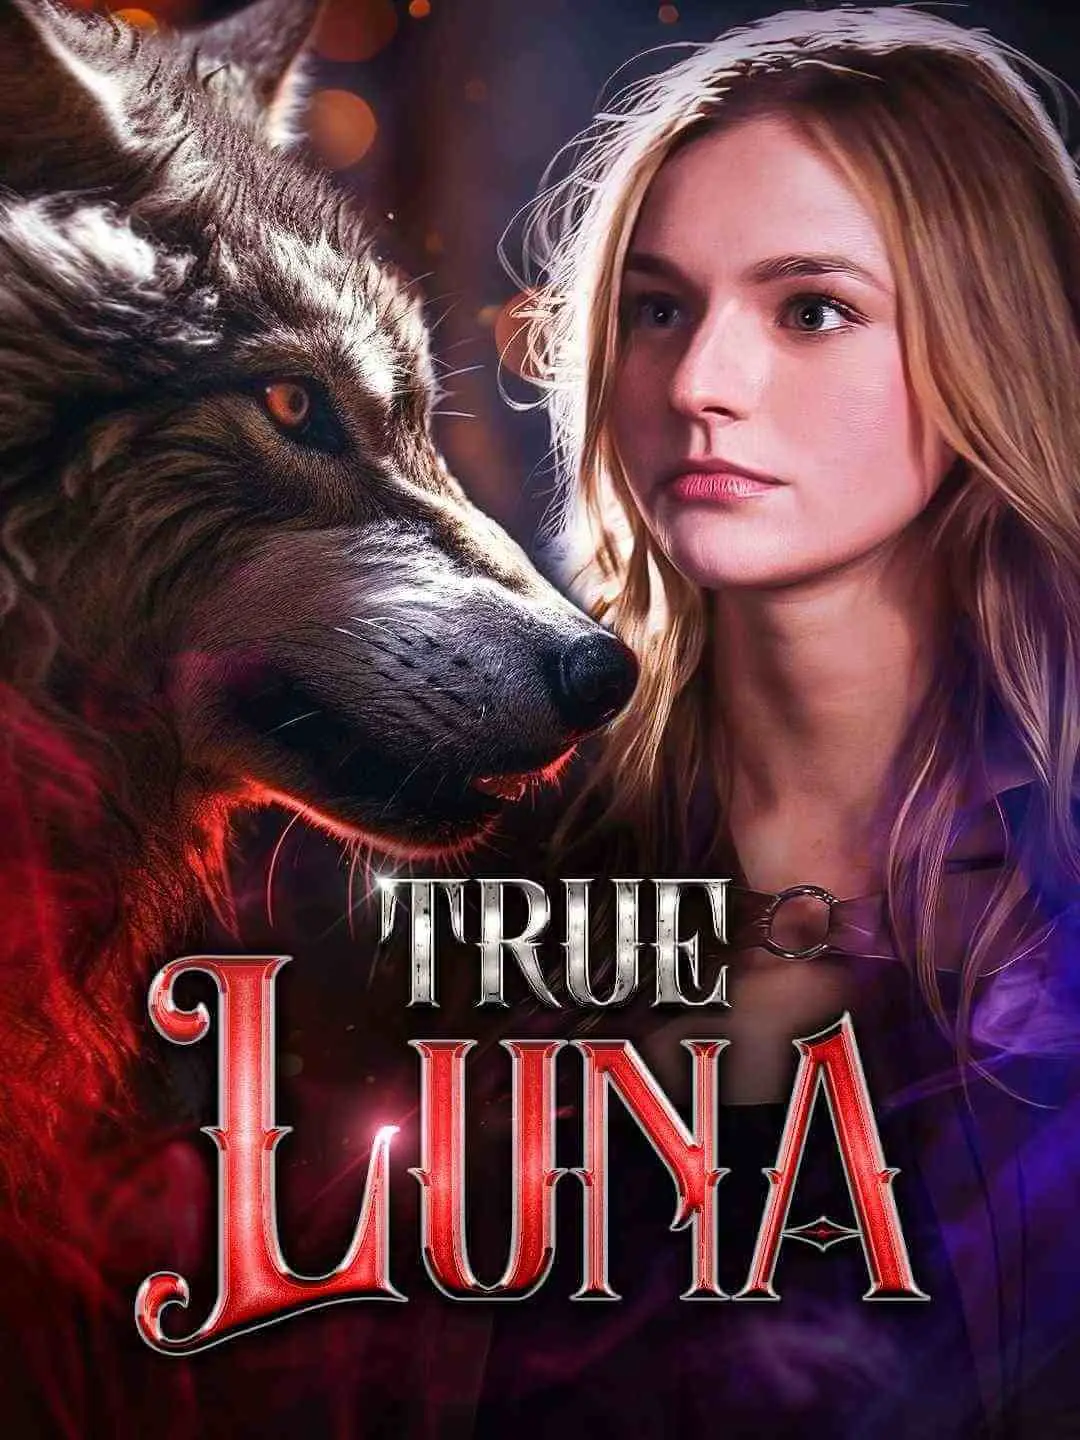 True Luna - Full Drama Episodes for free